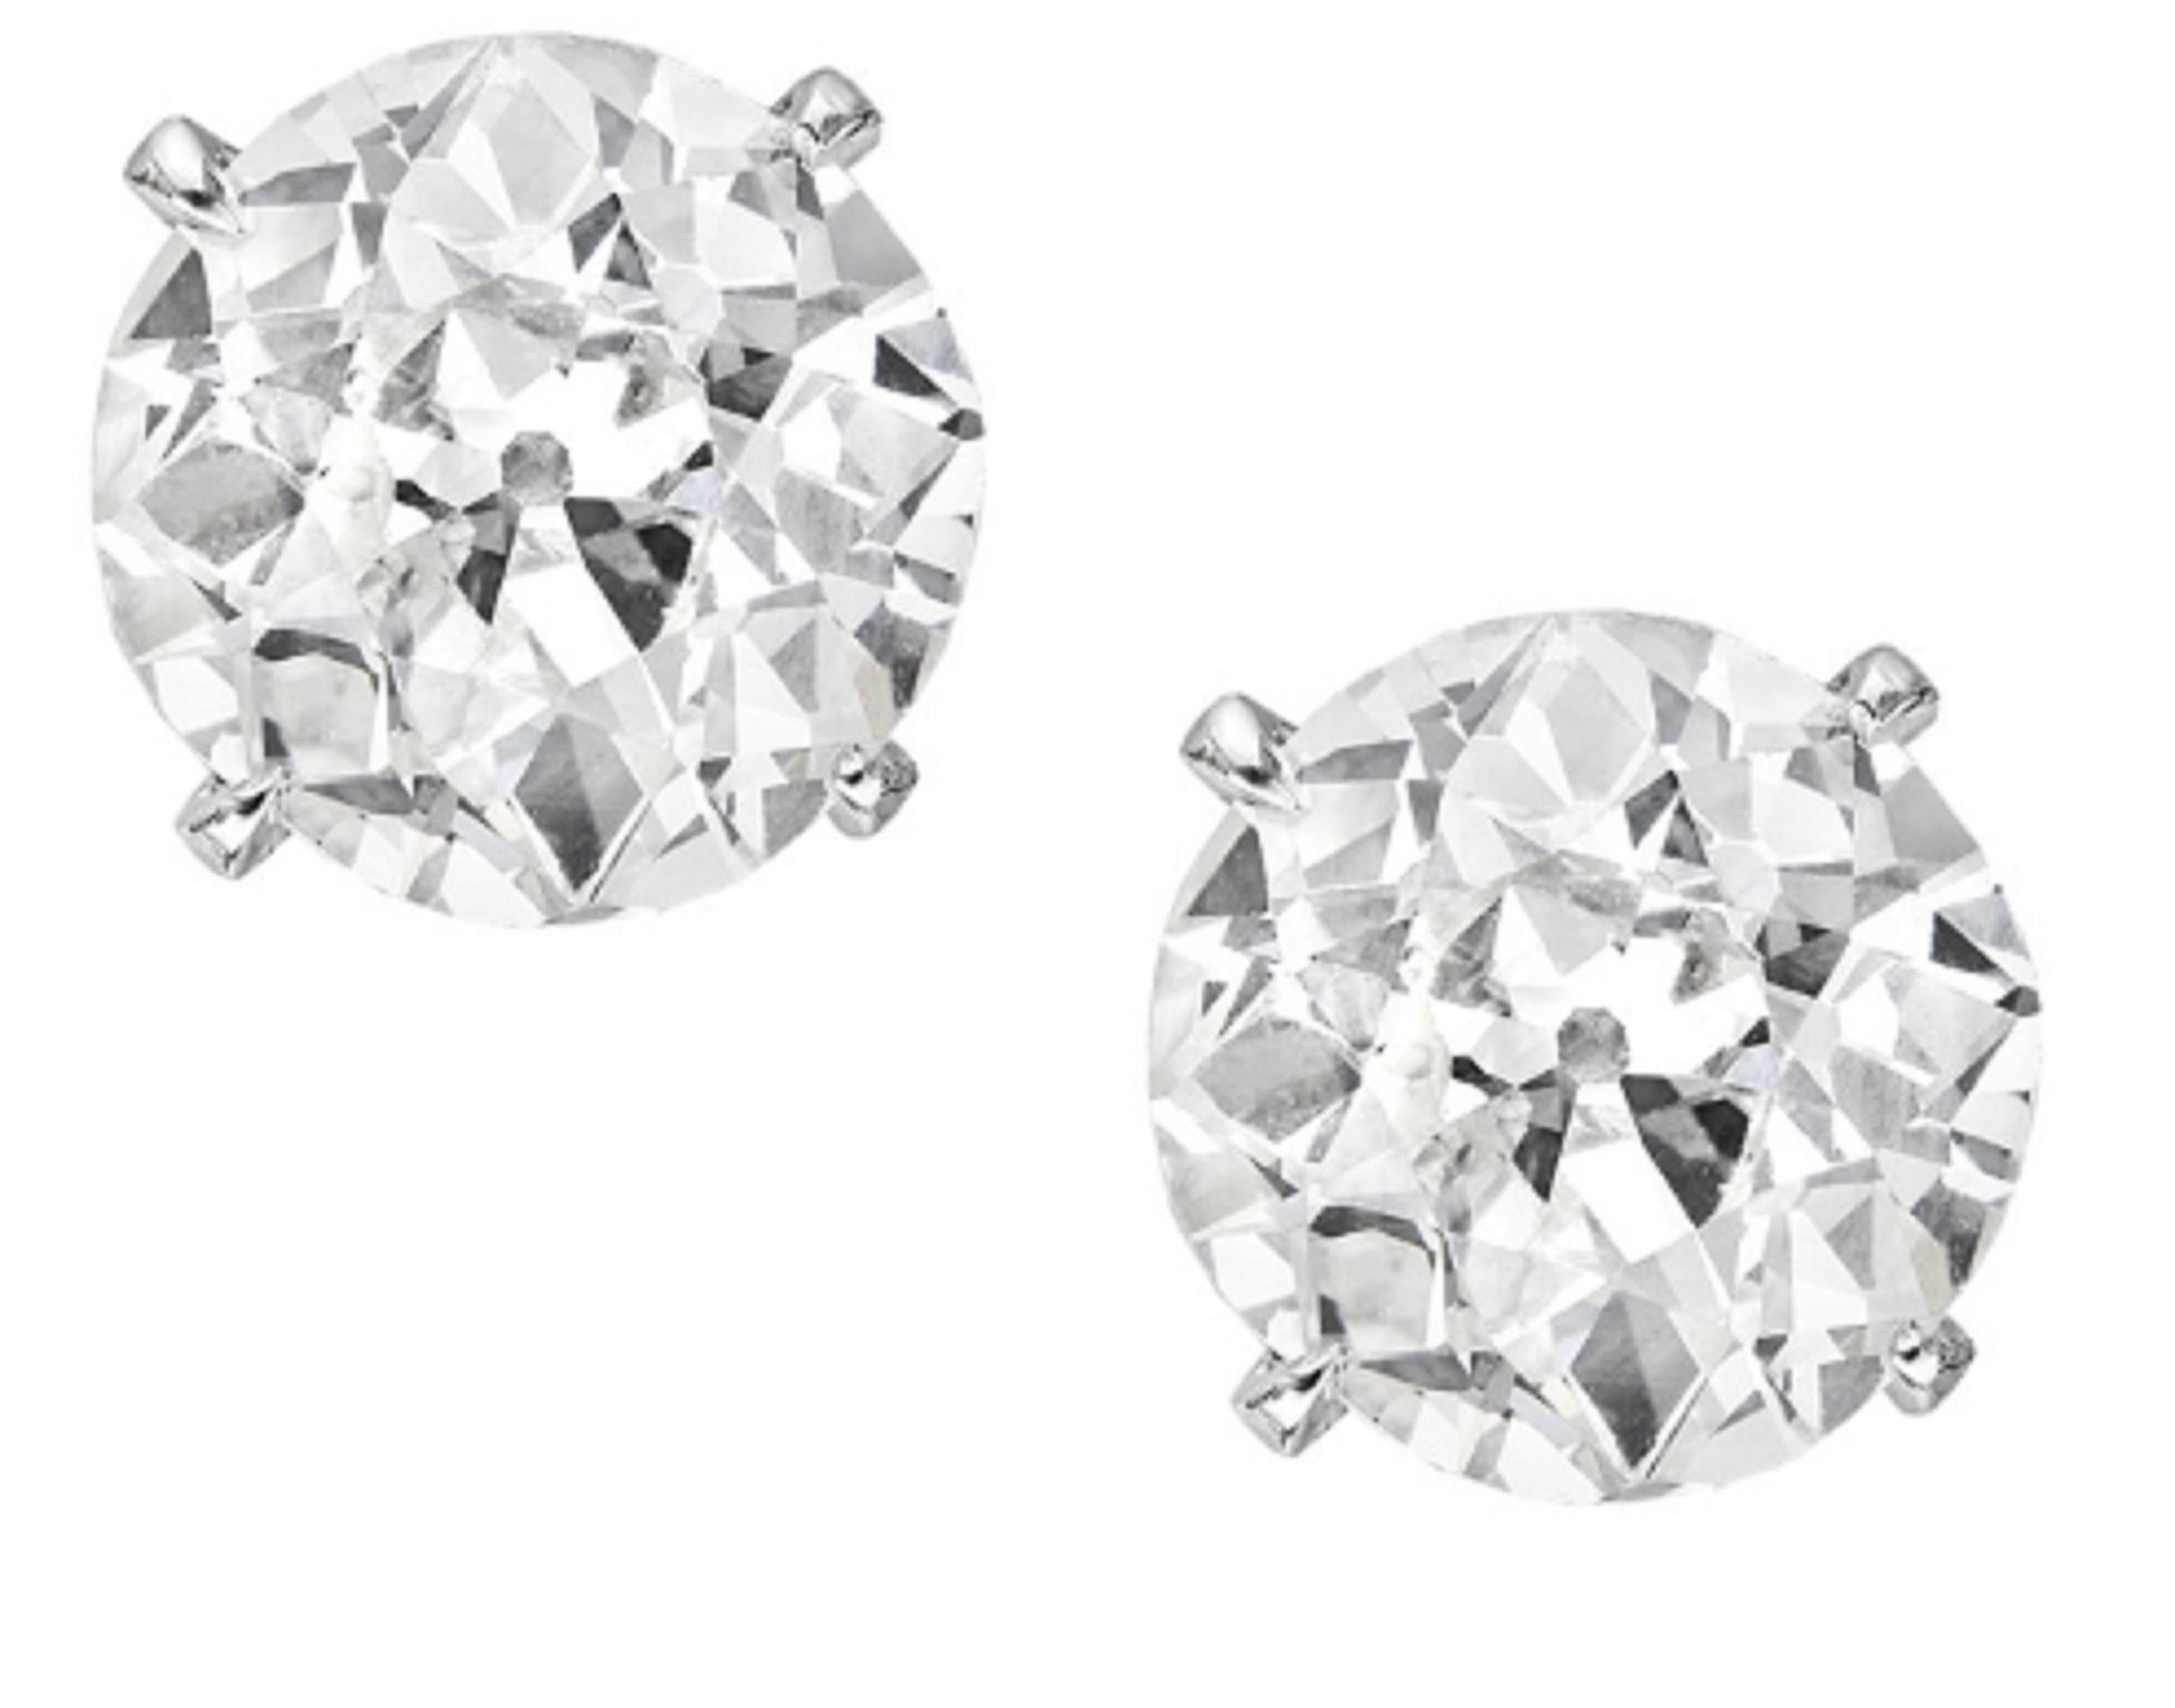 One of a Kind GIA Certified 3.63 Carat Total Diamond Weight, Old European Cut Diamond Studs F/E COLOR!
100% Eye clean
huge diamonds